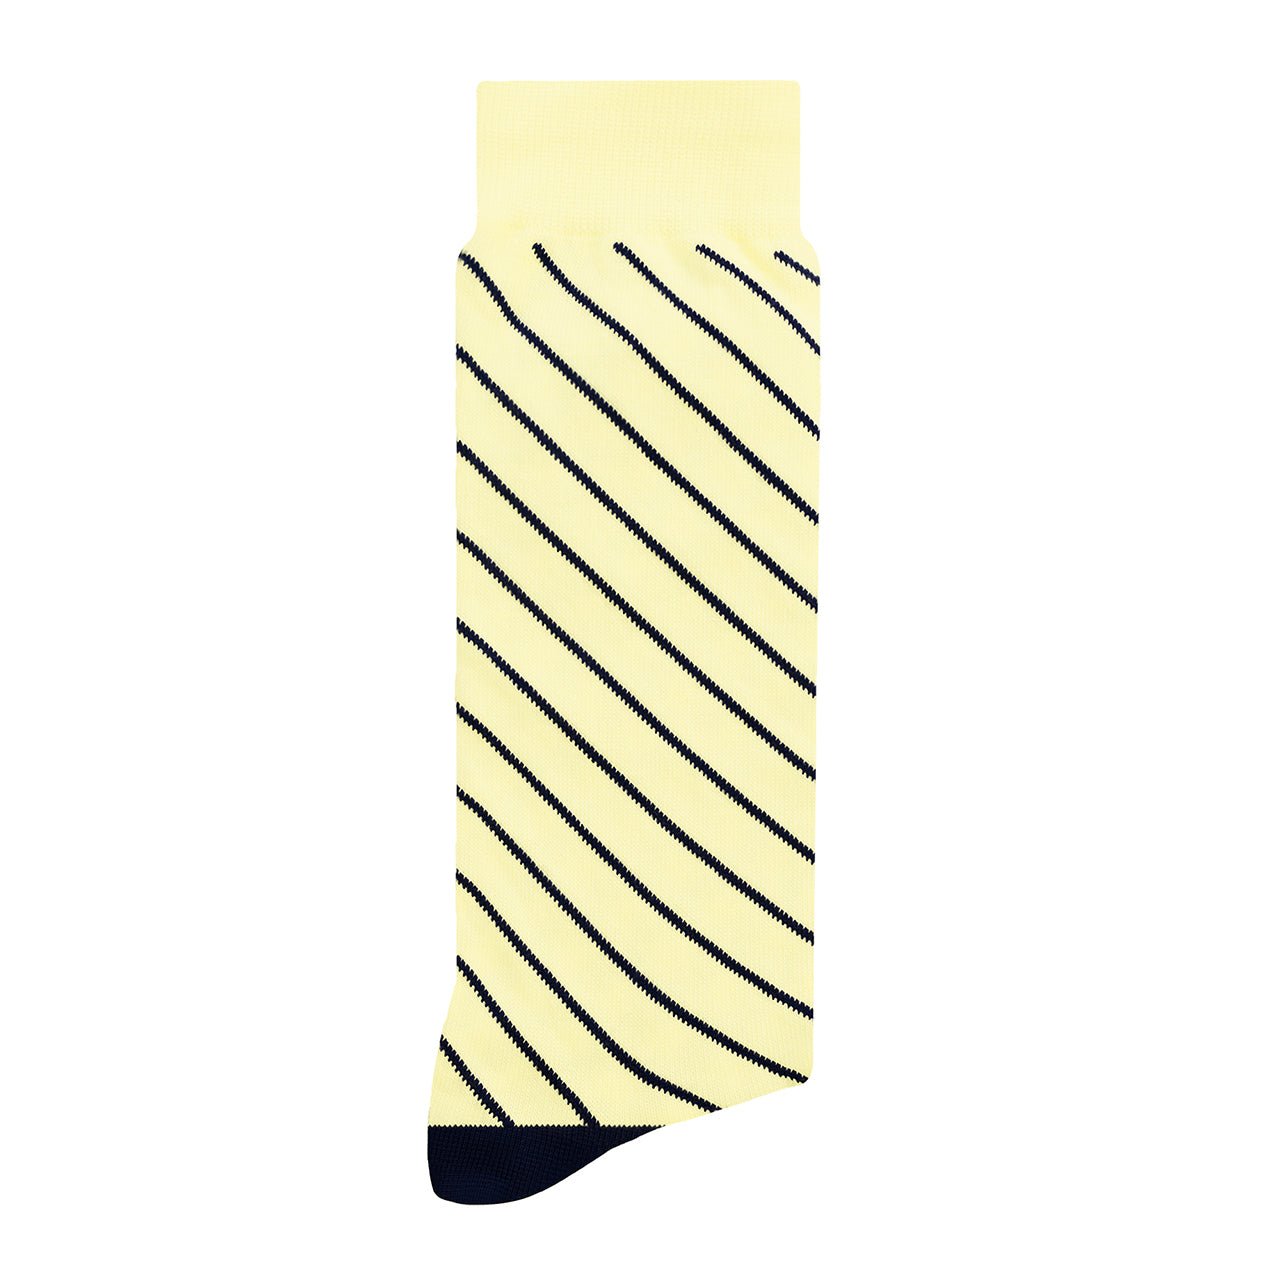 calcetin-lineas-amarillo119accesoriosskunk-socks-440964.jpg